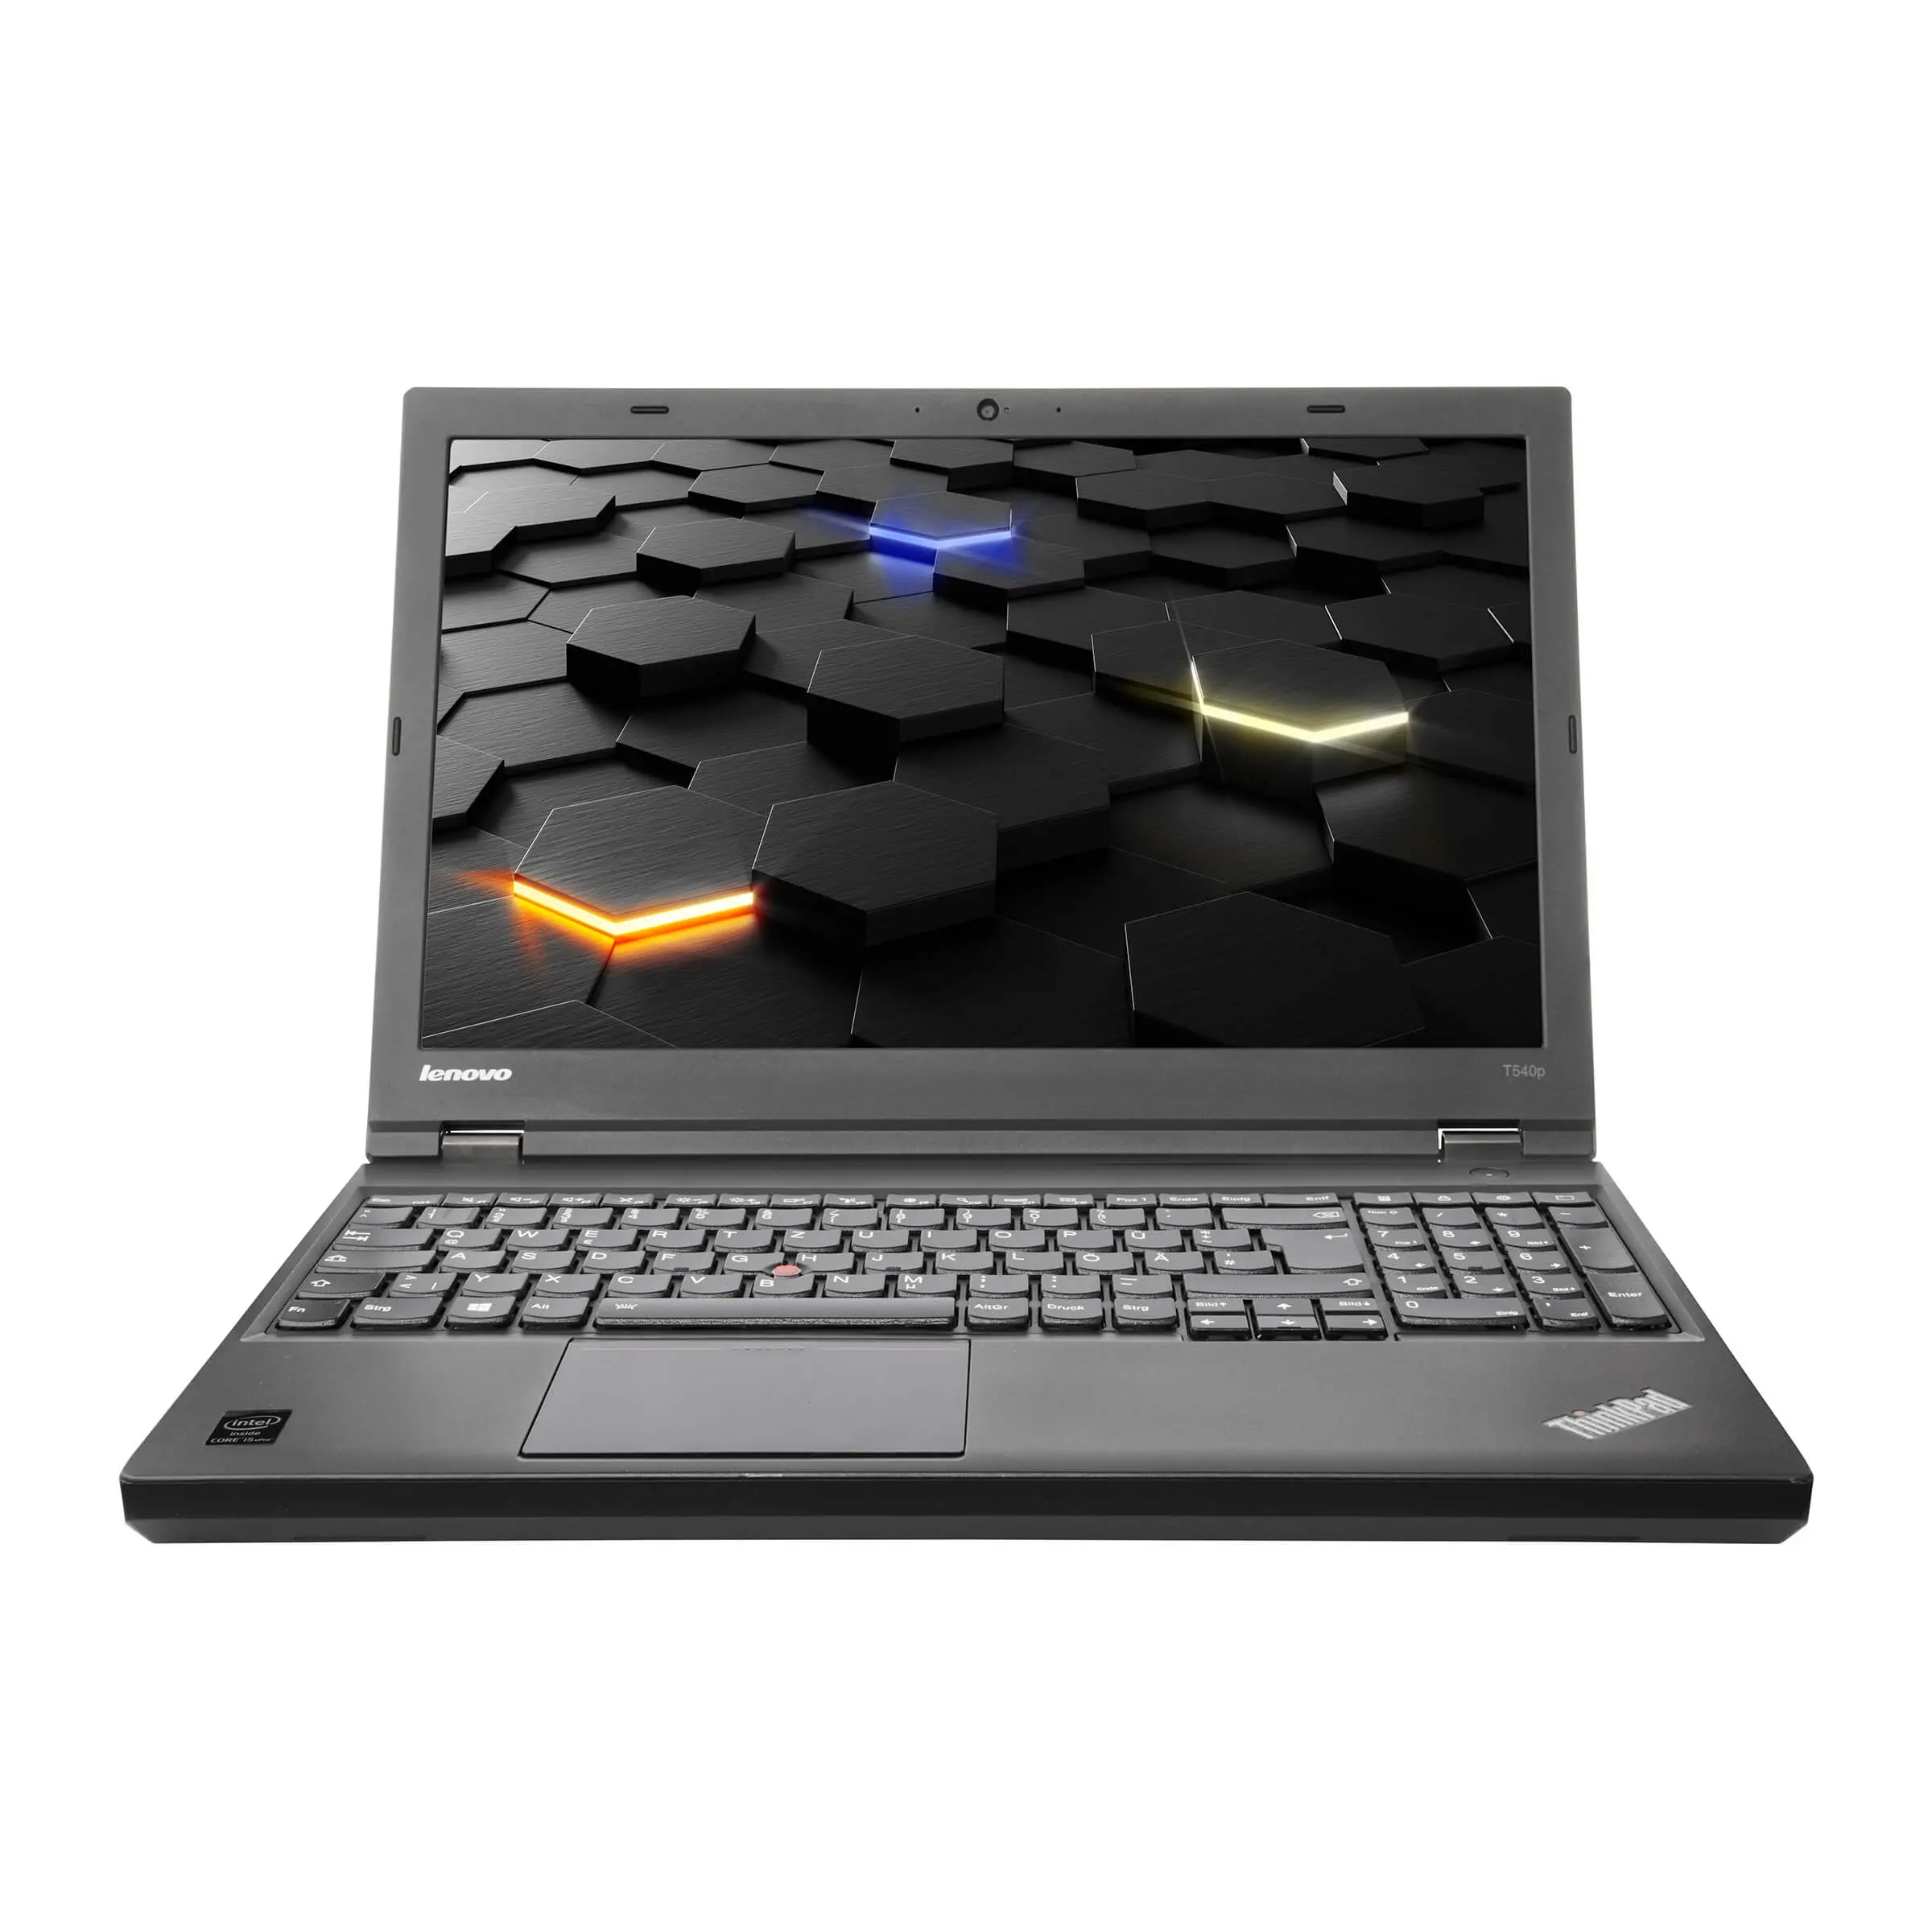 Lenovo ThinkPad P50, i7, 15.6" Full-HD IPS, 32GB, 500GB SSD + 1TB HDD, Webcam, Windows 10 Pro